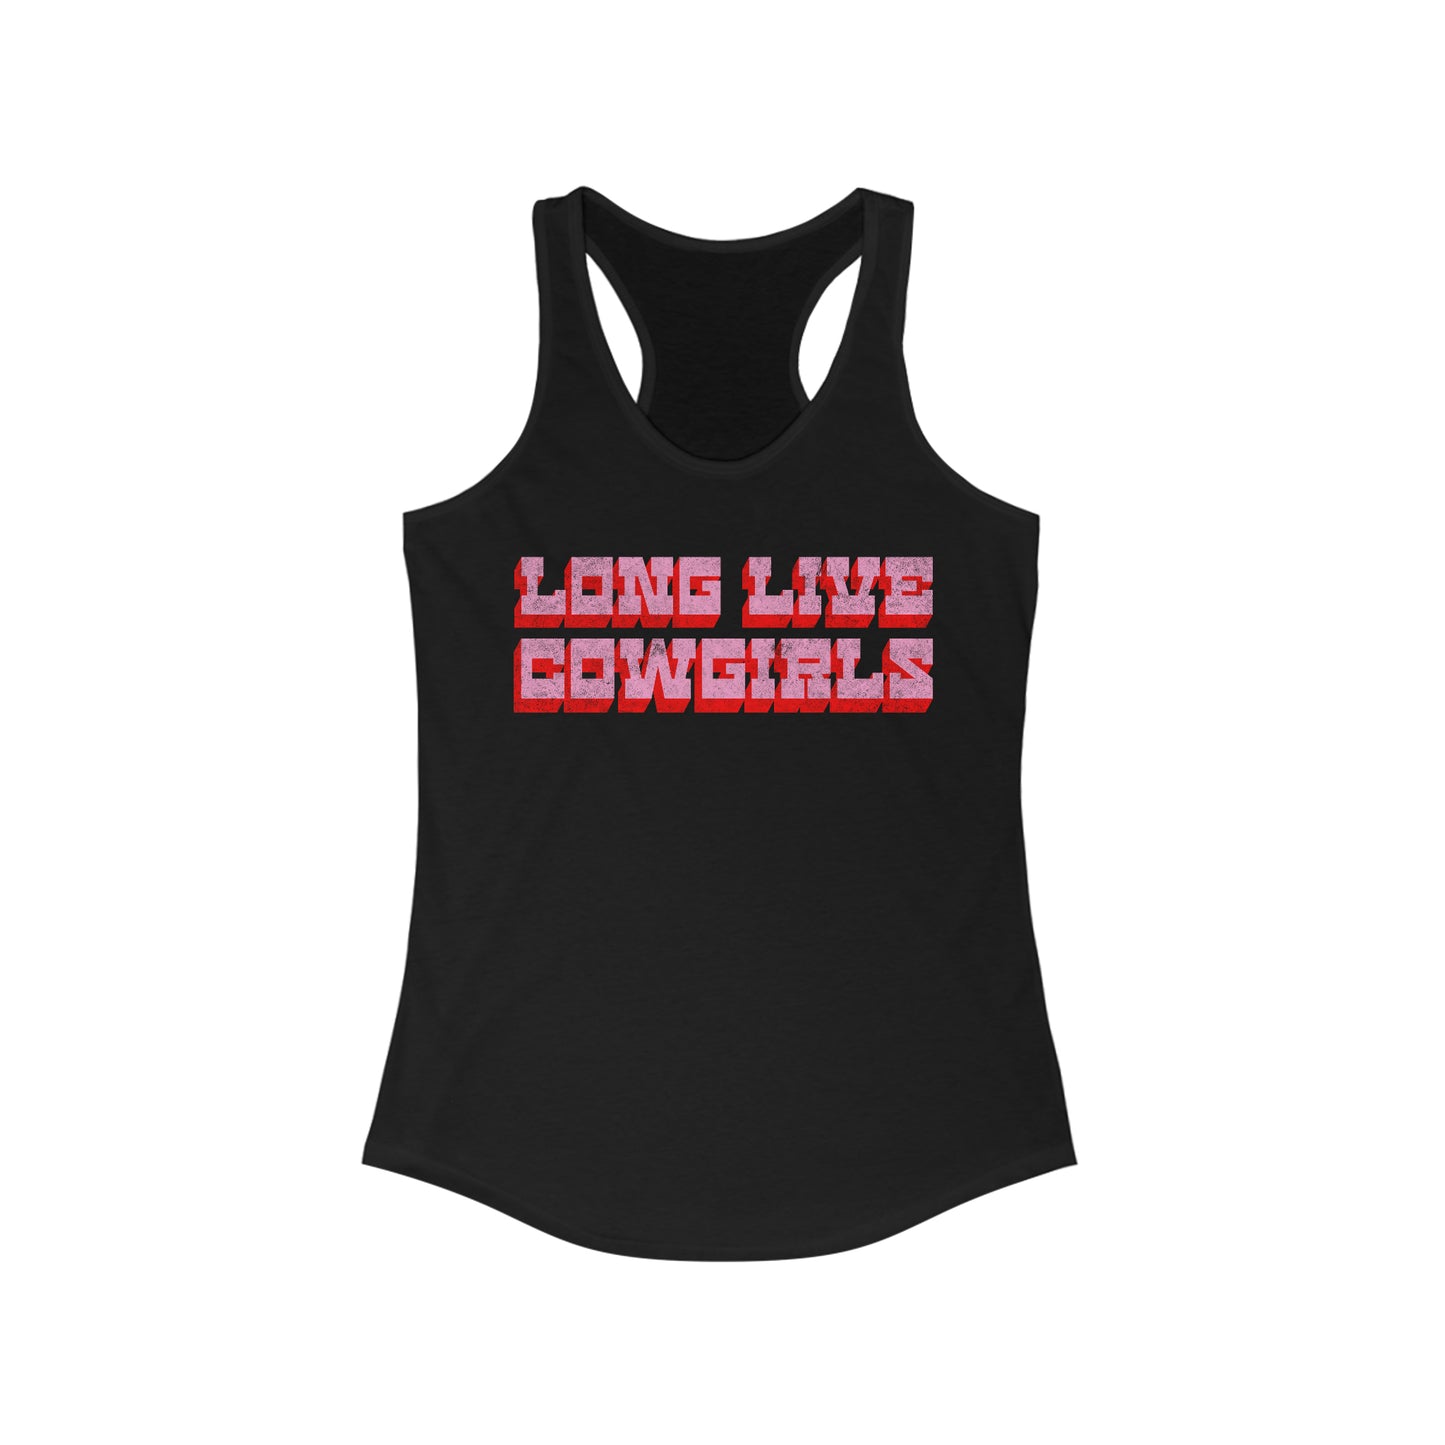 Long Live Cowgirls - Women's Ideal Racerback Tank